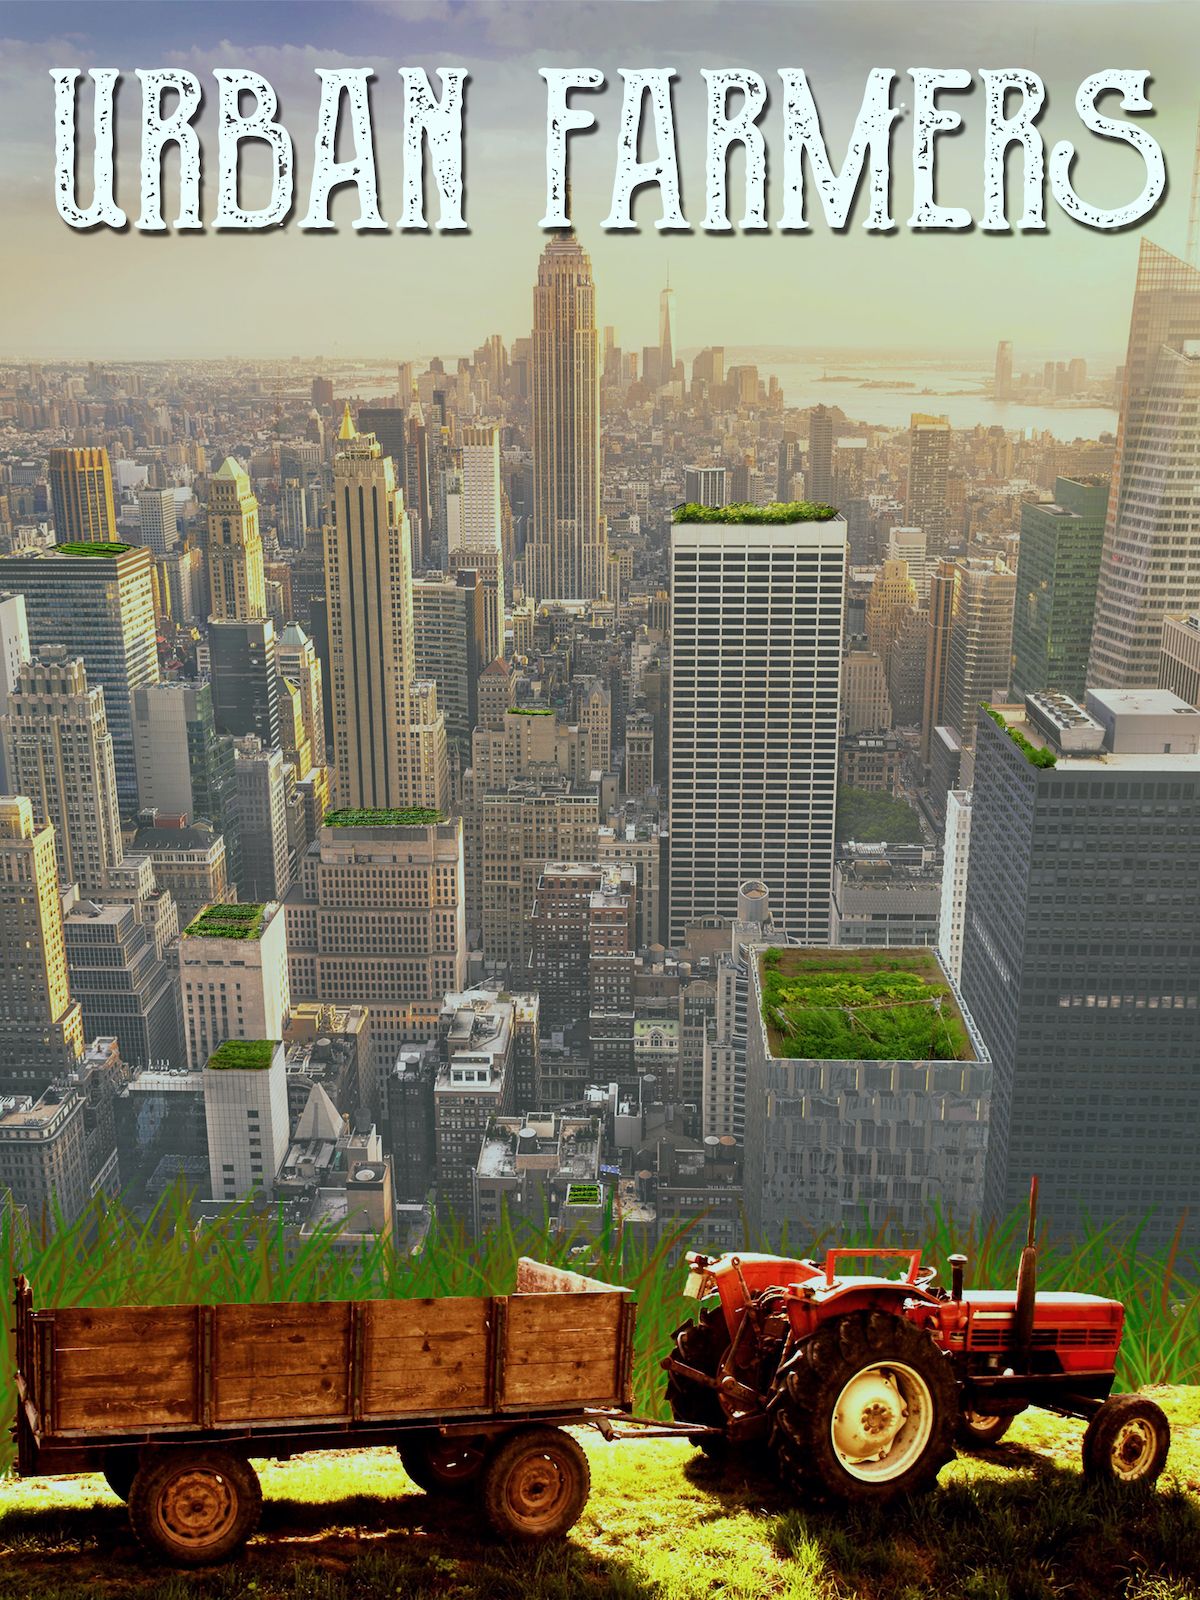 Urban Farmers